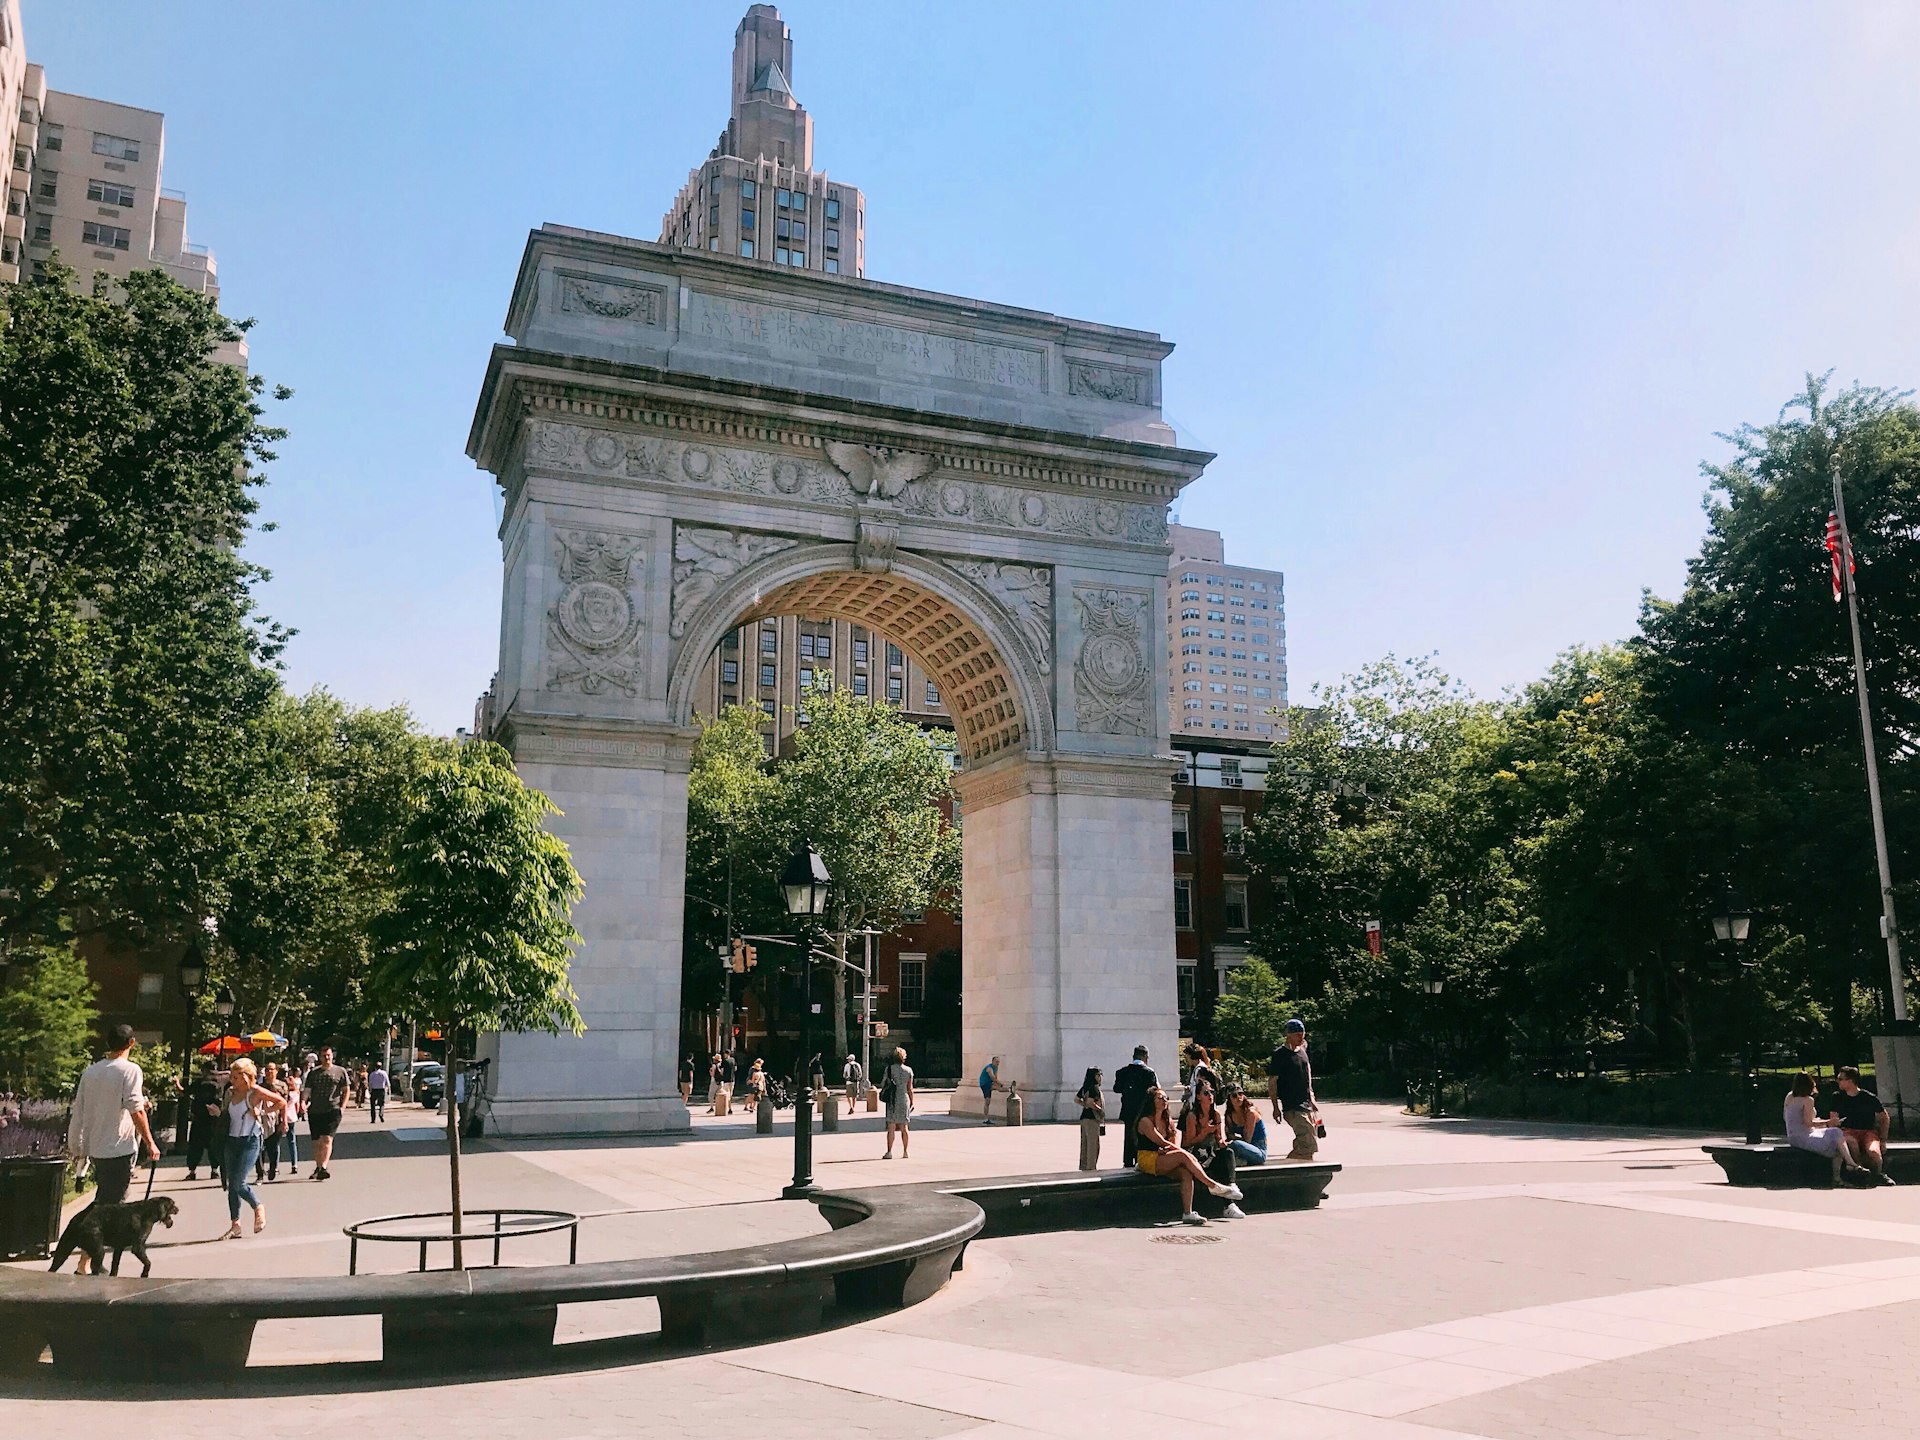 Washington Square Arch in Washington Square Park.